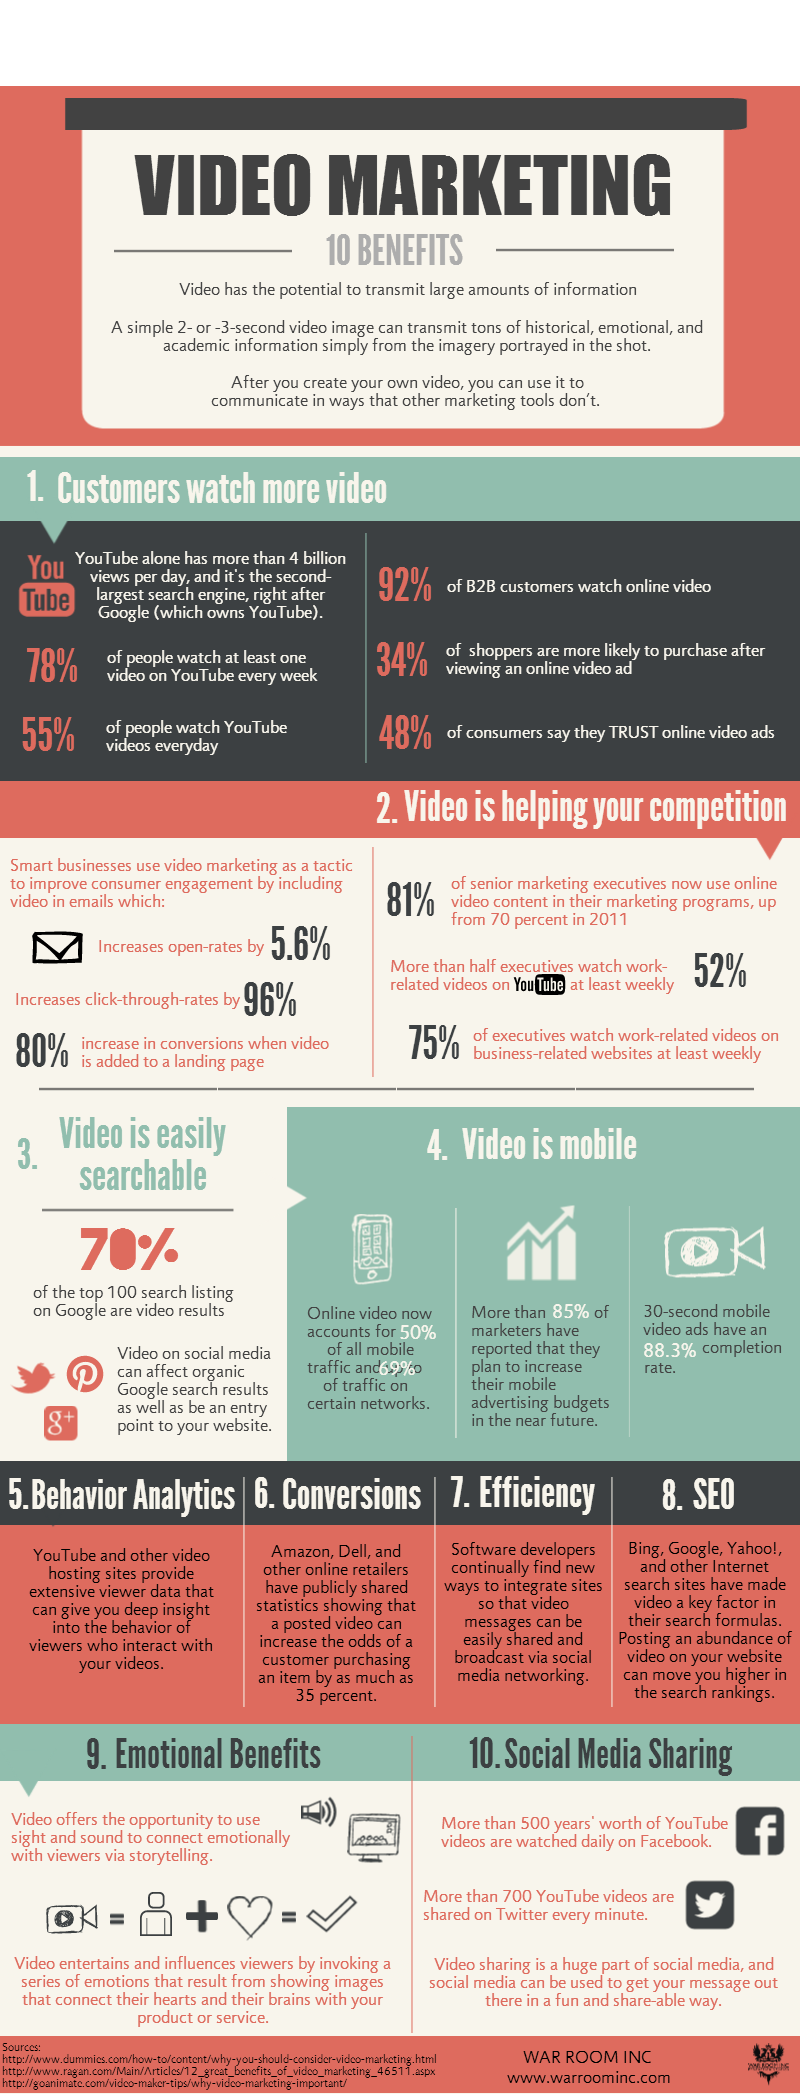 benefits-video-marketing.png